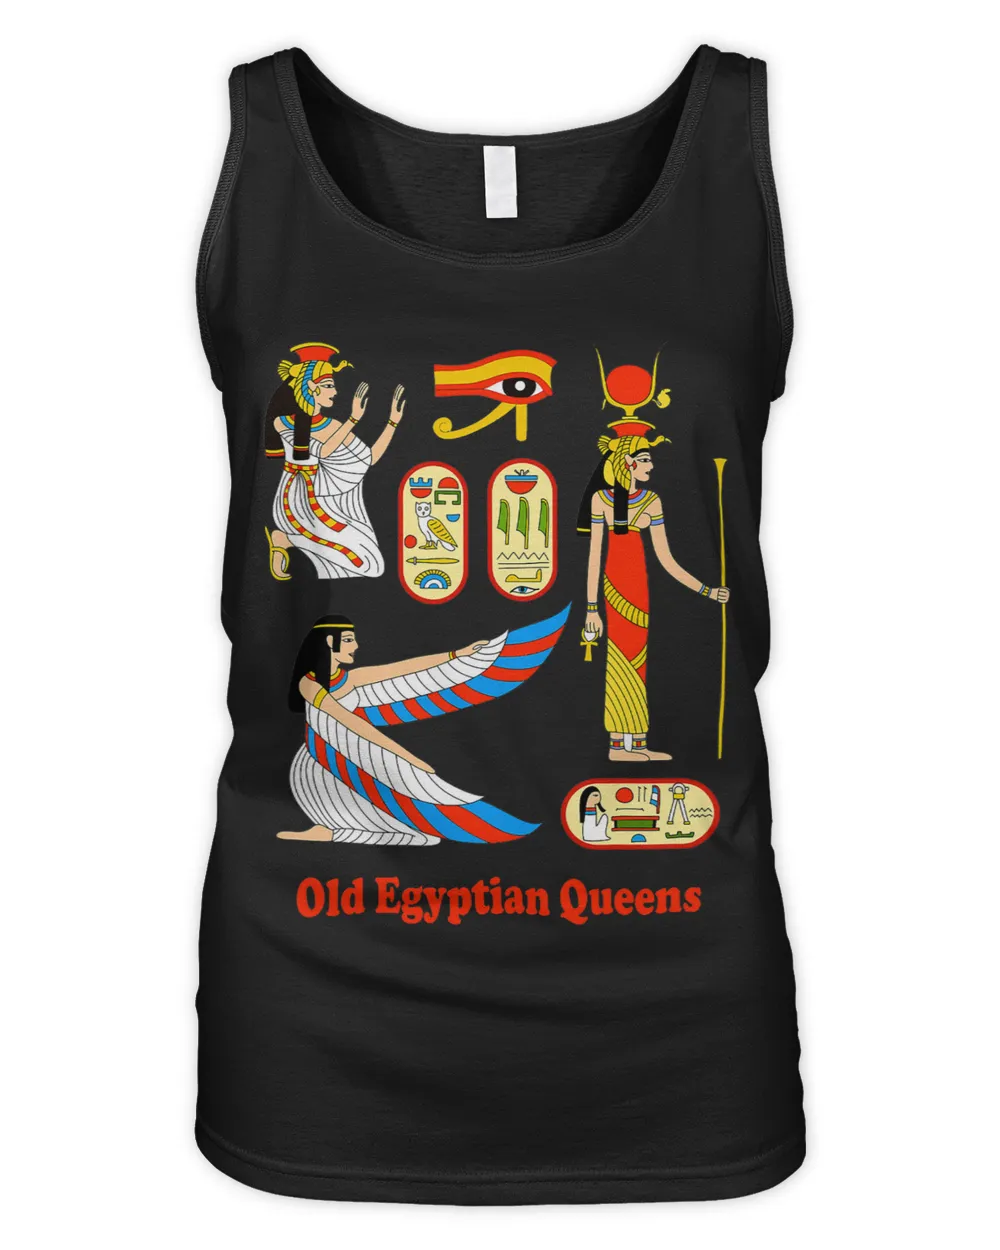 Old Egyptian Queens Deities Pharaonic family bday Xmas